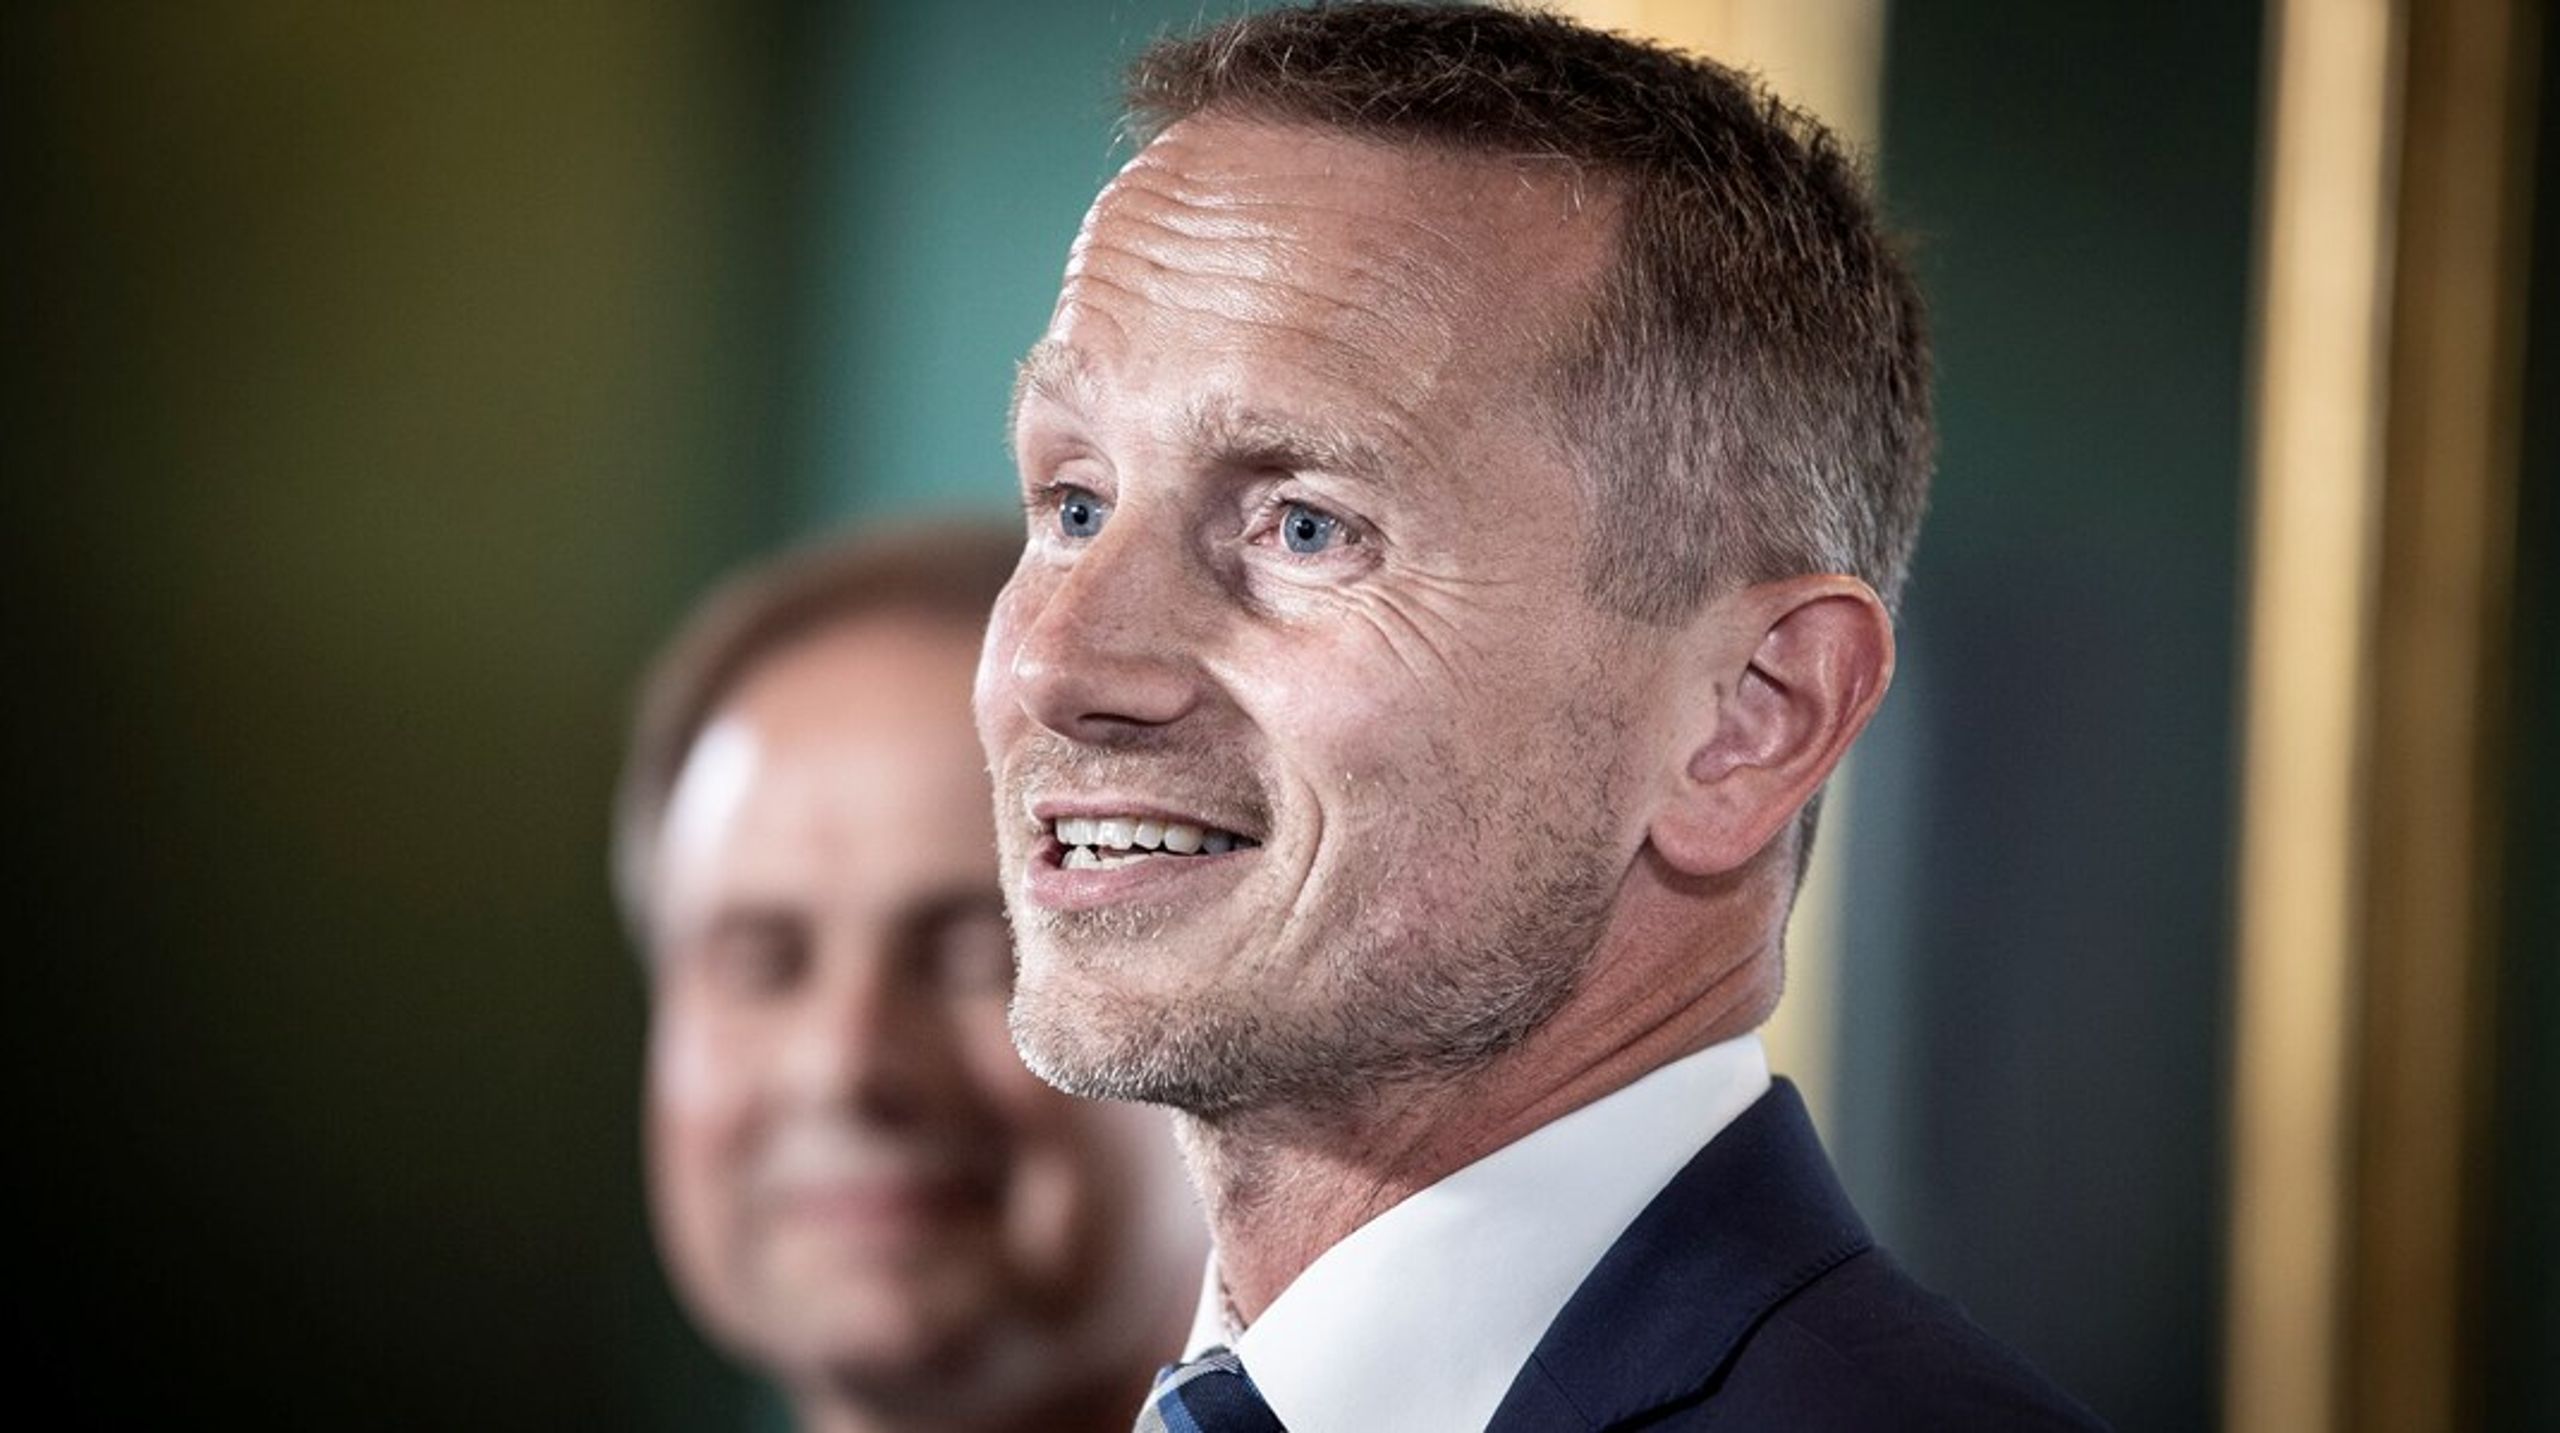 Den afgående finansminister Kristian Jensen med den nye finansminister Nicolai Wammen i baggrunden ved ministeroverdragelsen i juni 2019.&nbsp;